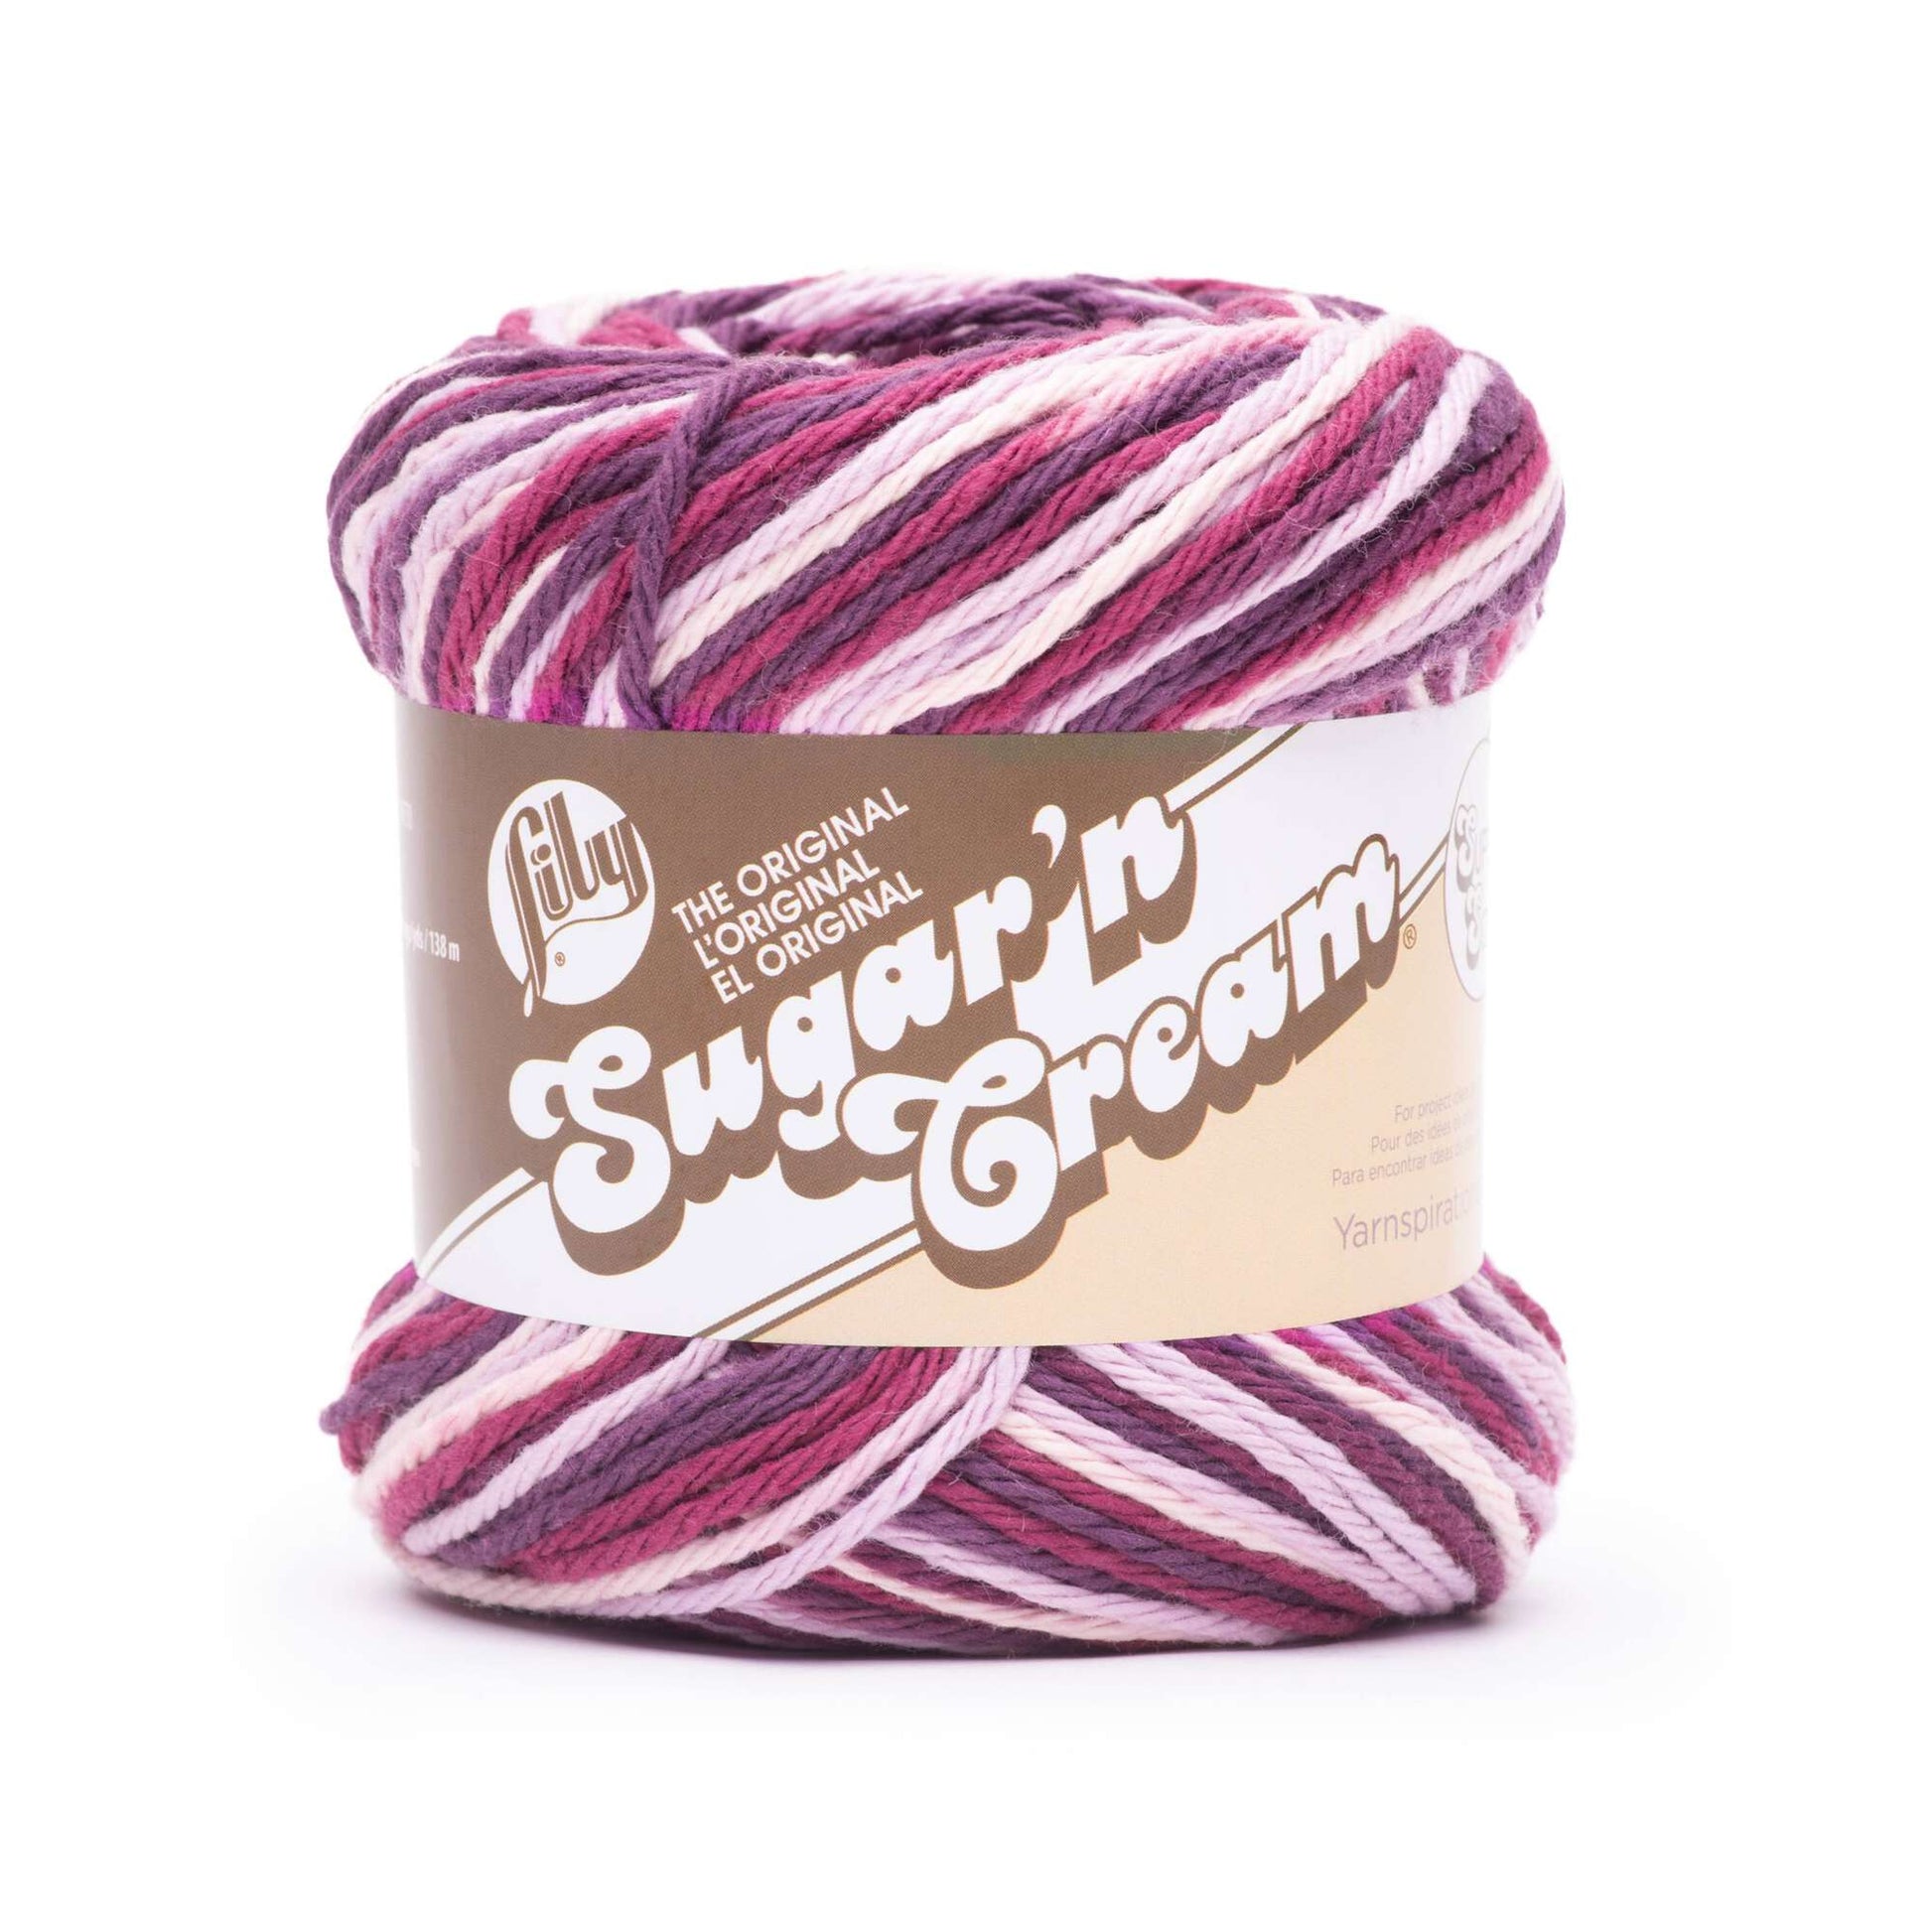 Lily Sugar'n Cream Super Size Ombres Yarn